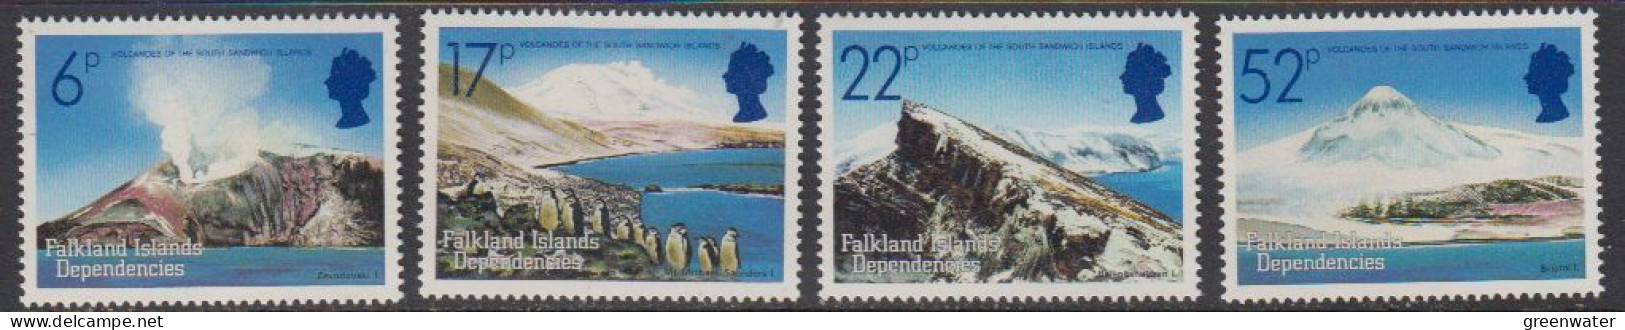 Falkland Islands Dependencies (FID) 1984 Volcanoes 4v ** Mnh (59823) - South Georgia